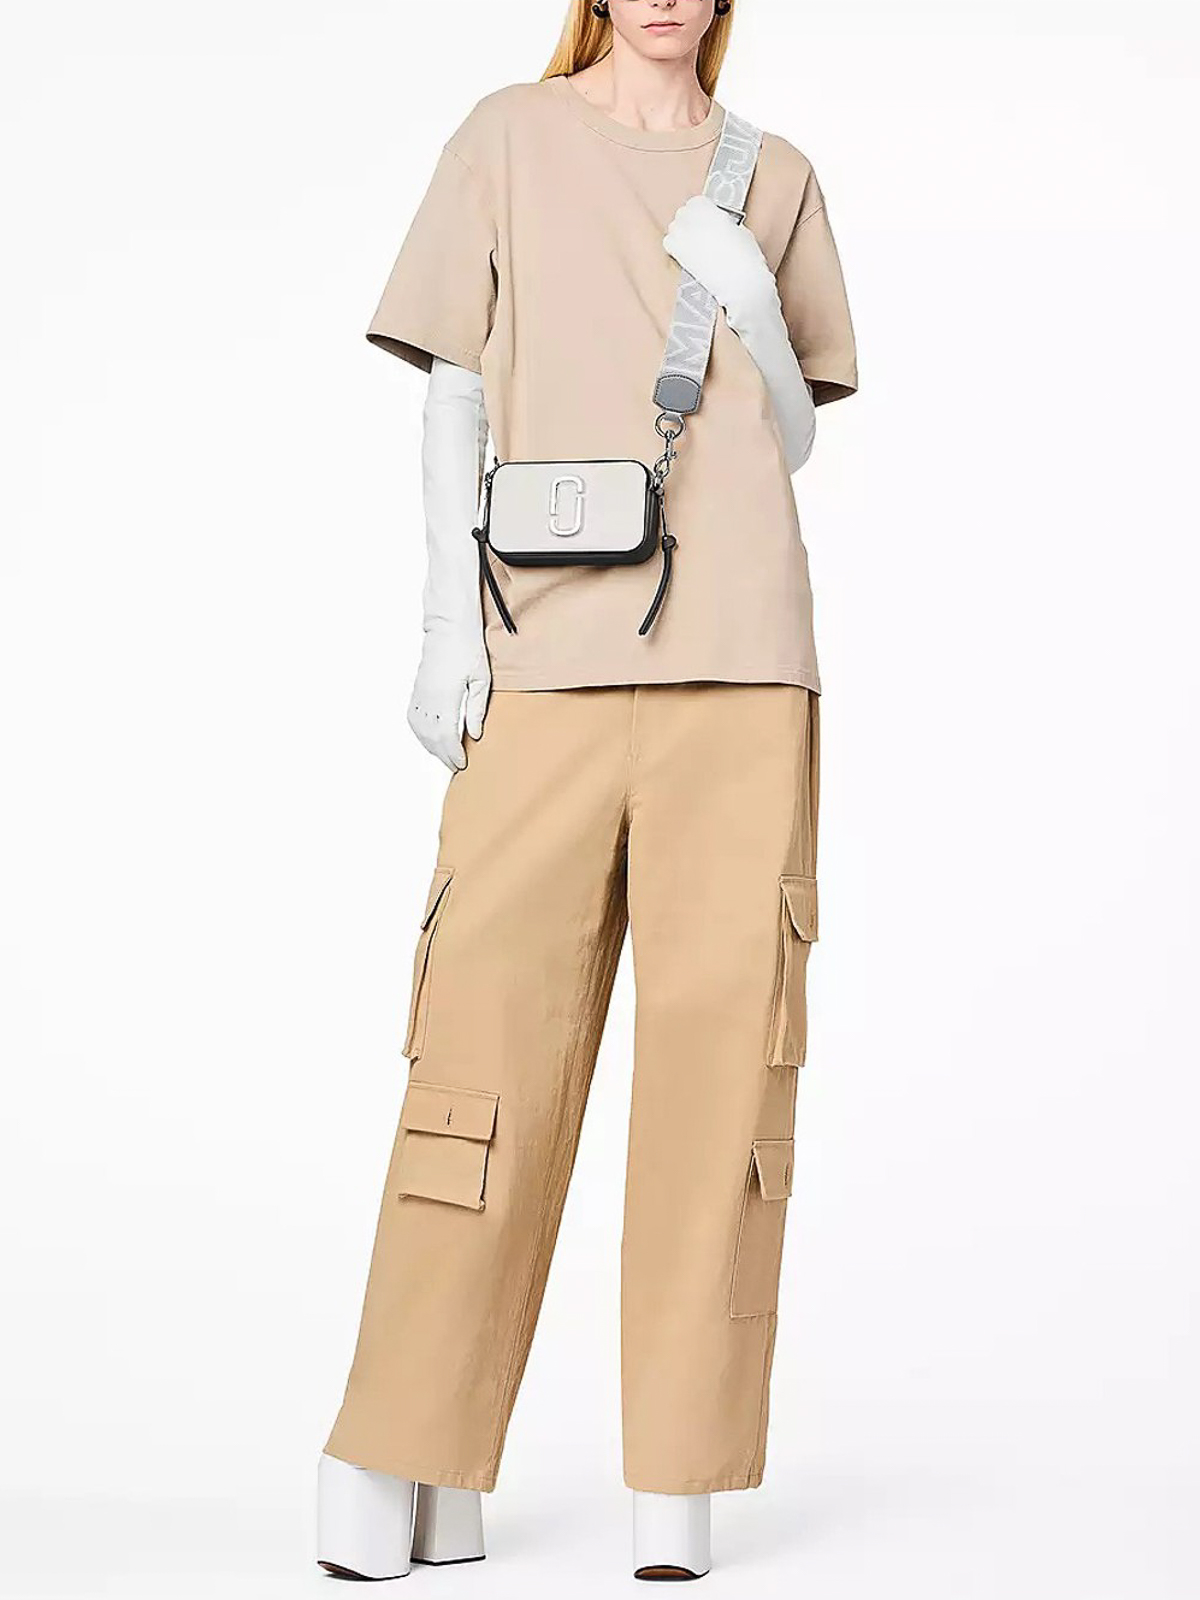 Marc Jacobs 'The Snapshot' Crossbody Bag